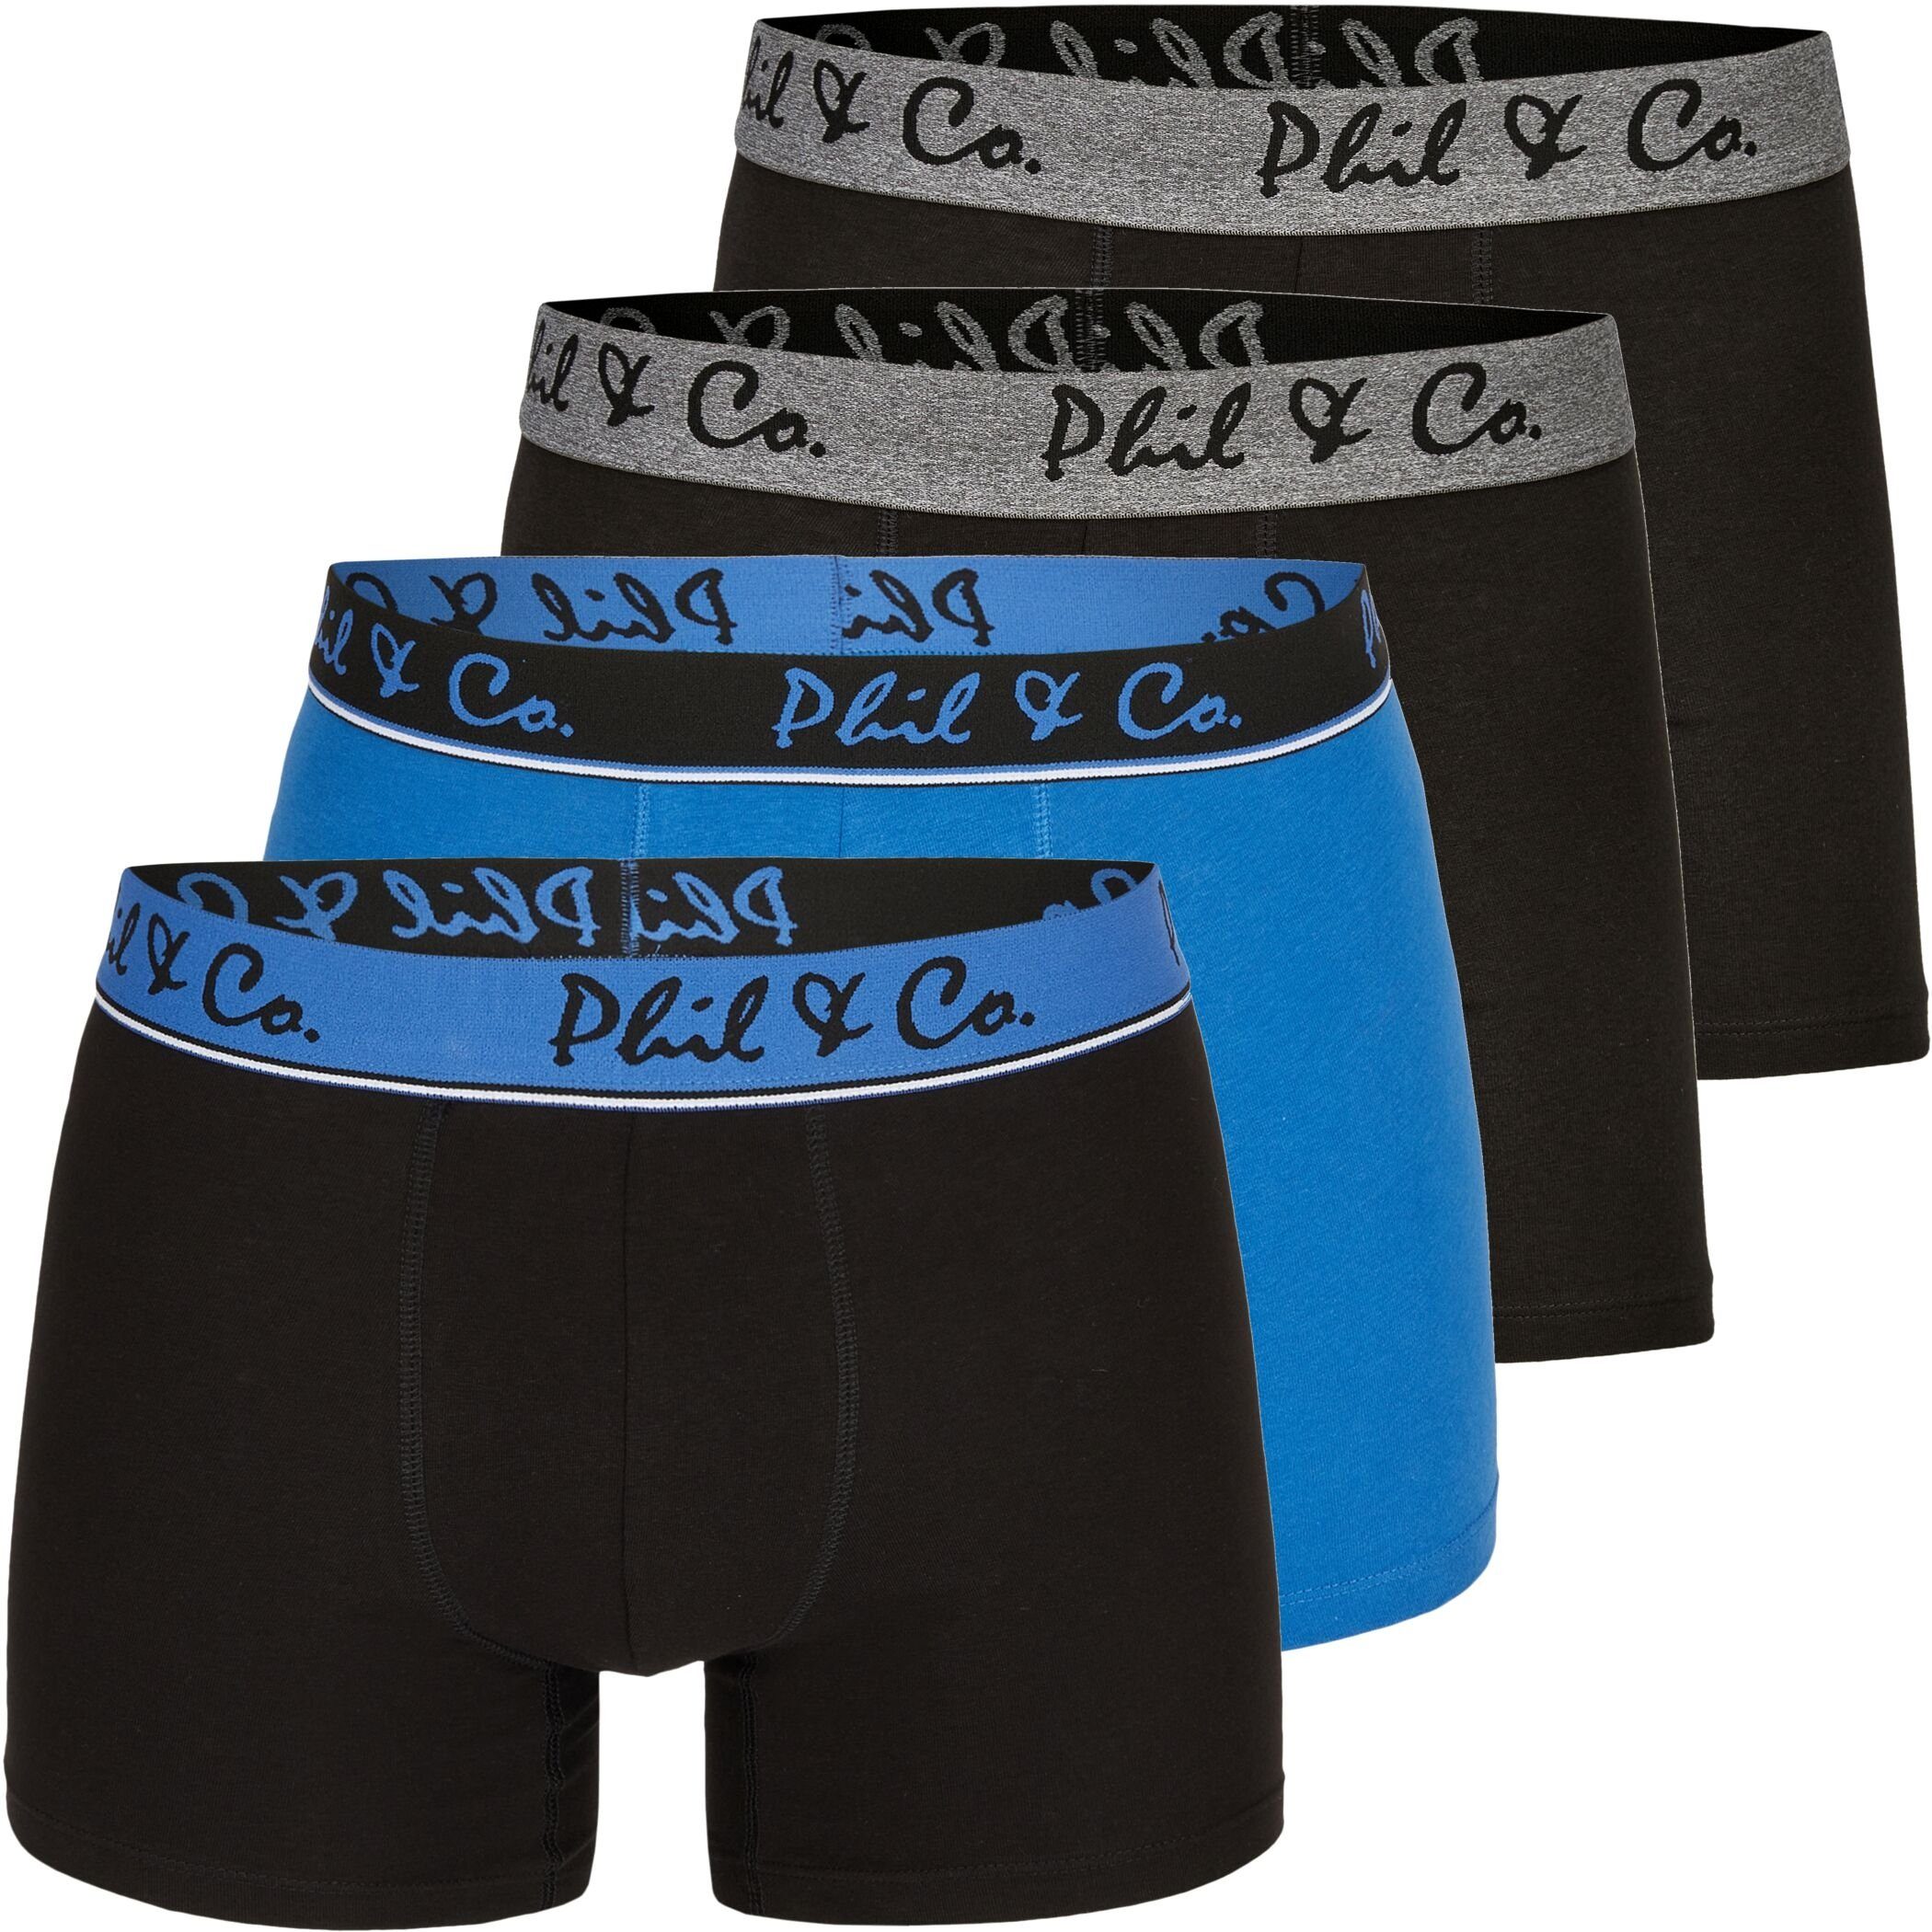 Phil & Co. Boxershorts 4er Trunk DESIGN Short (1-St) 04 Boxershorts FARBWAHL Phil Jersey Berlin Pant Co & Pack